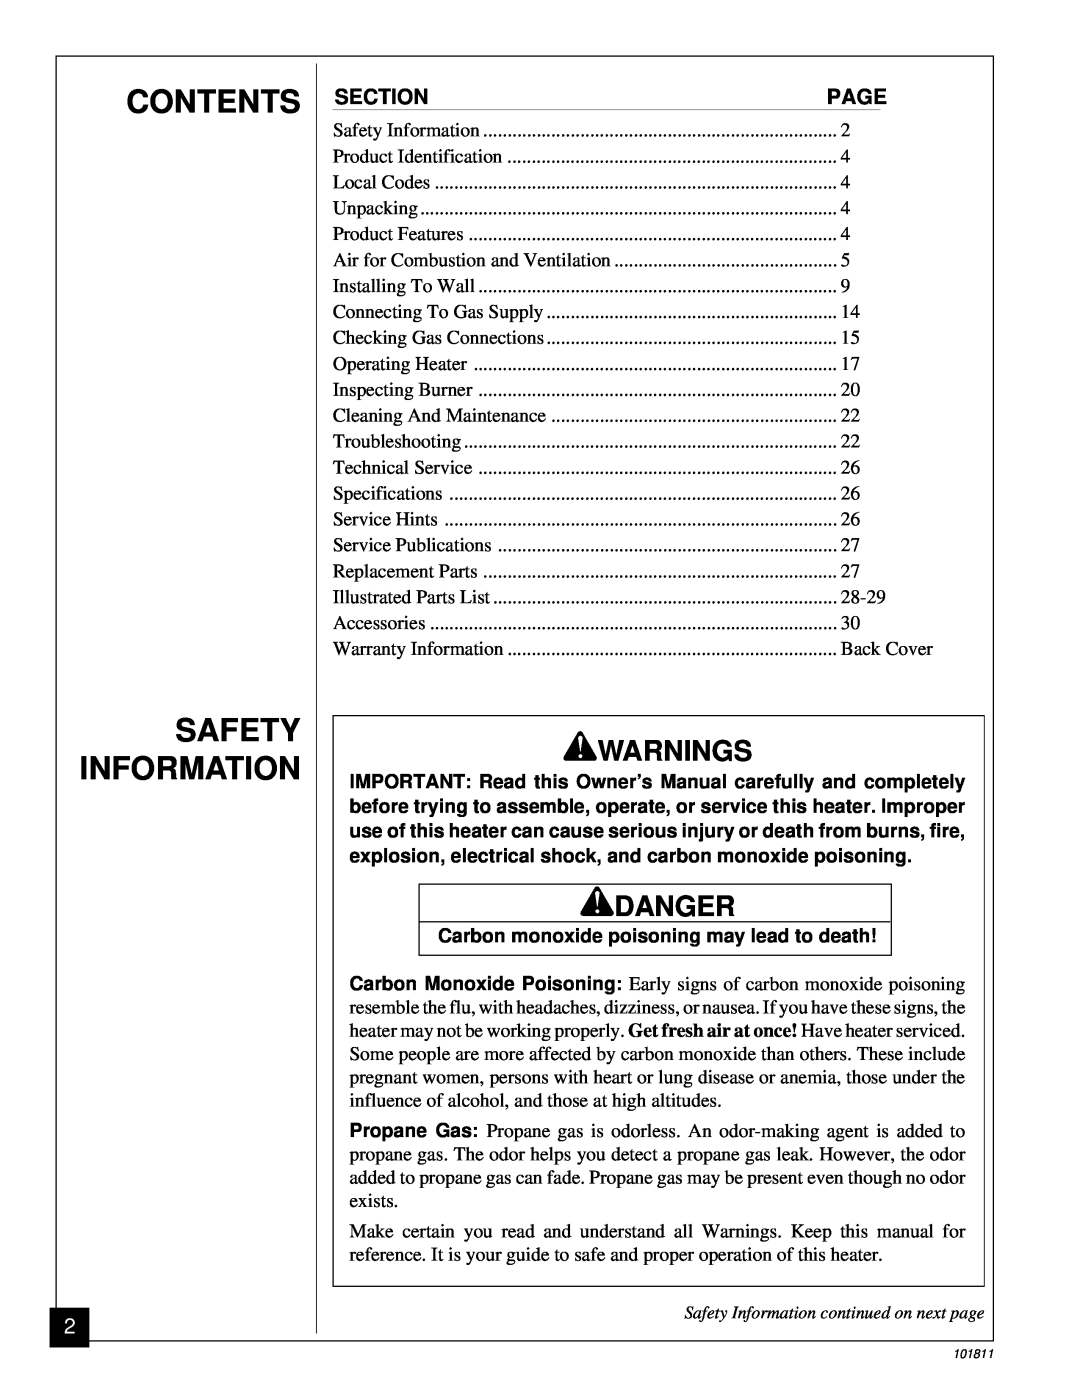 Desa 101811-01C.pdf installation manual Contents Safety Information, Warnings, Danger 